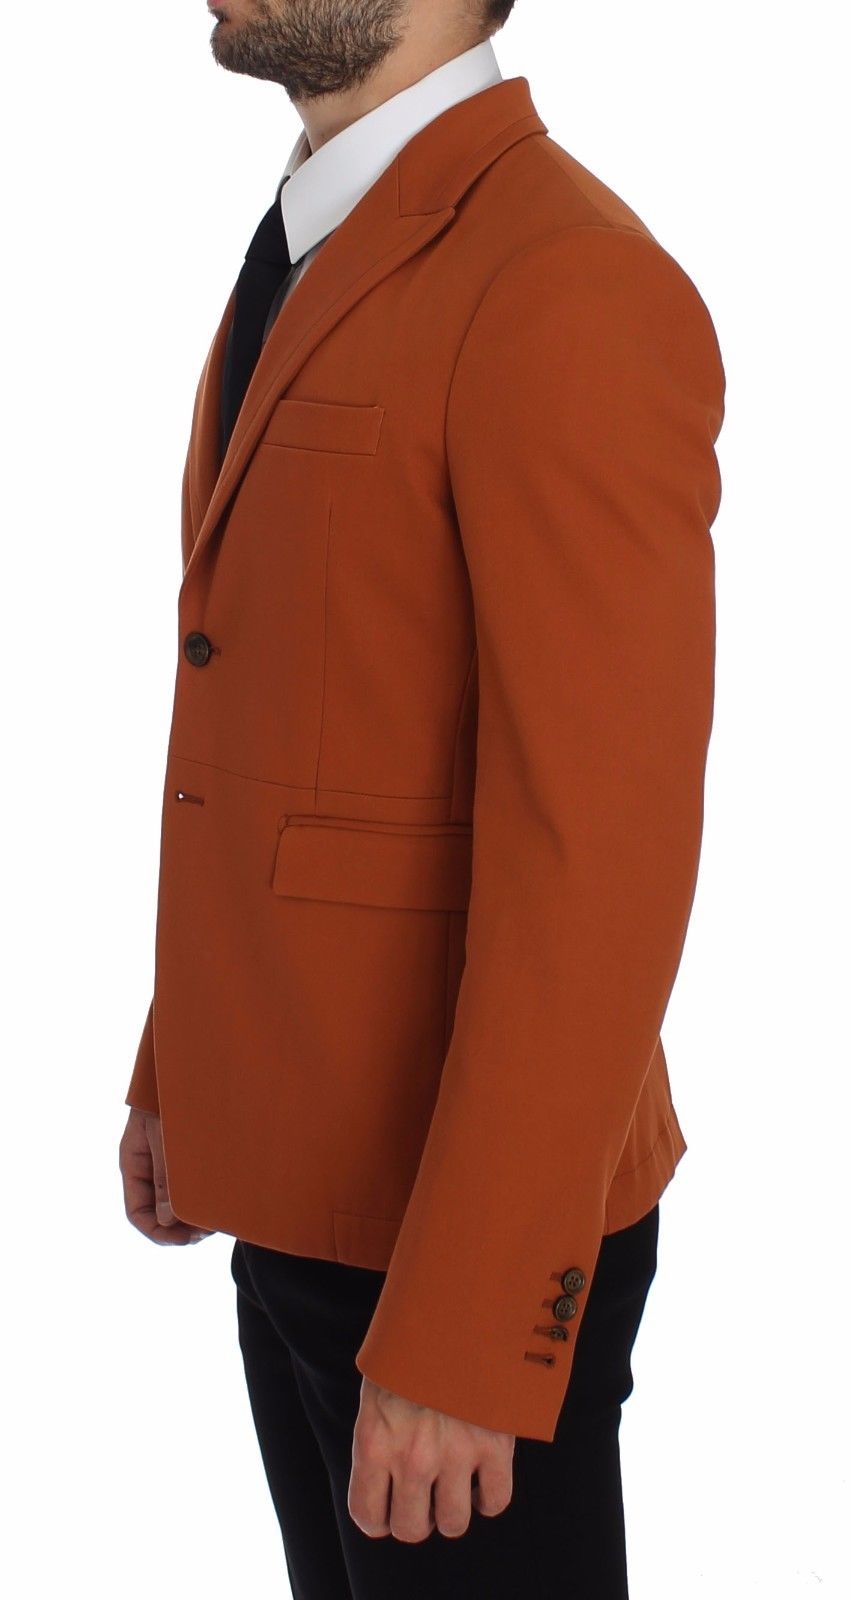 Dolce & Gabbana Elegant Orange Casual Cotton Blend Blazer